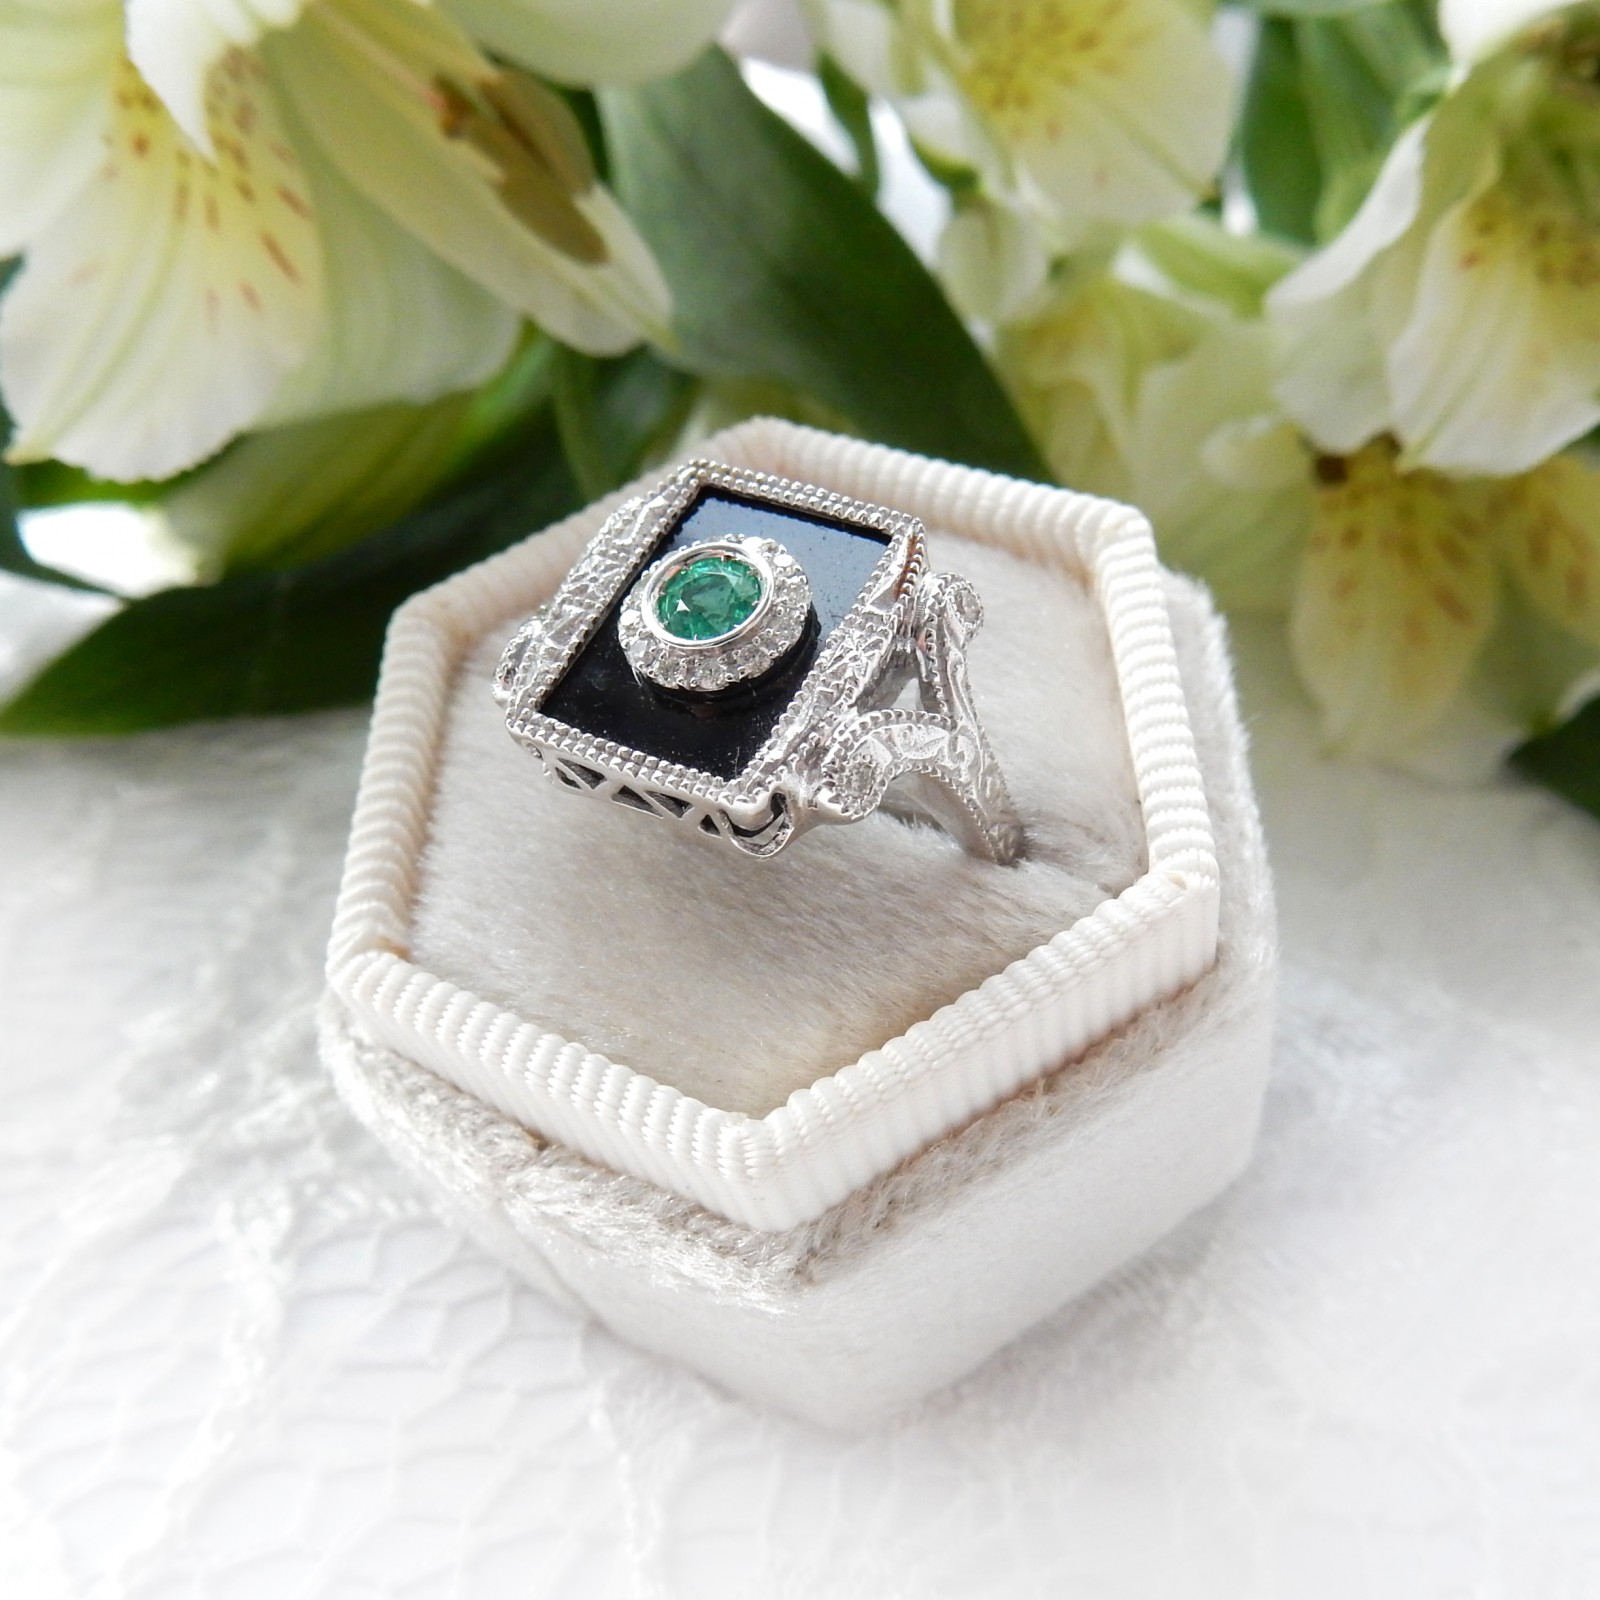 14 Karat Gold Diamond Emerald Ring With .6 Carat Diamond And Emeralds |  #1868612587